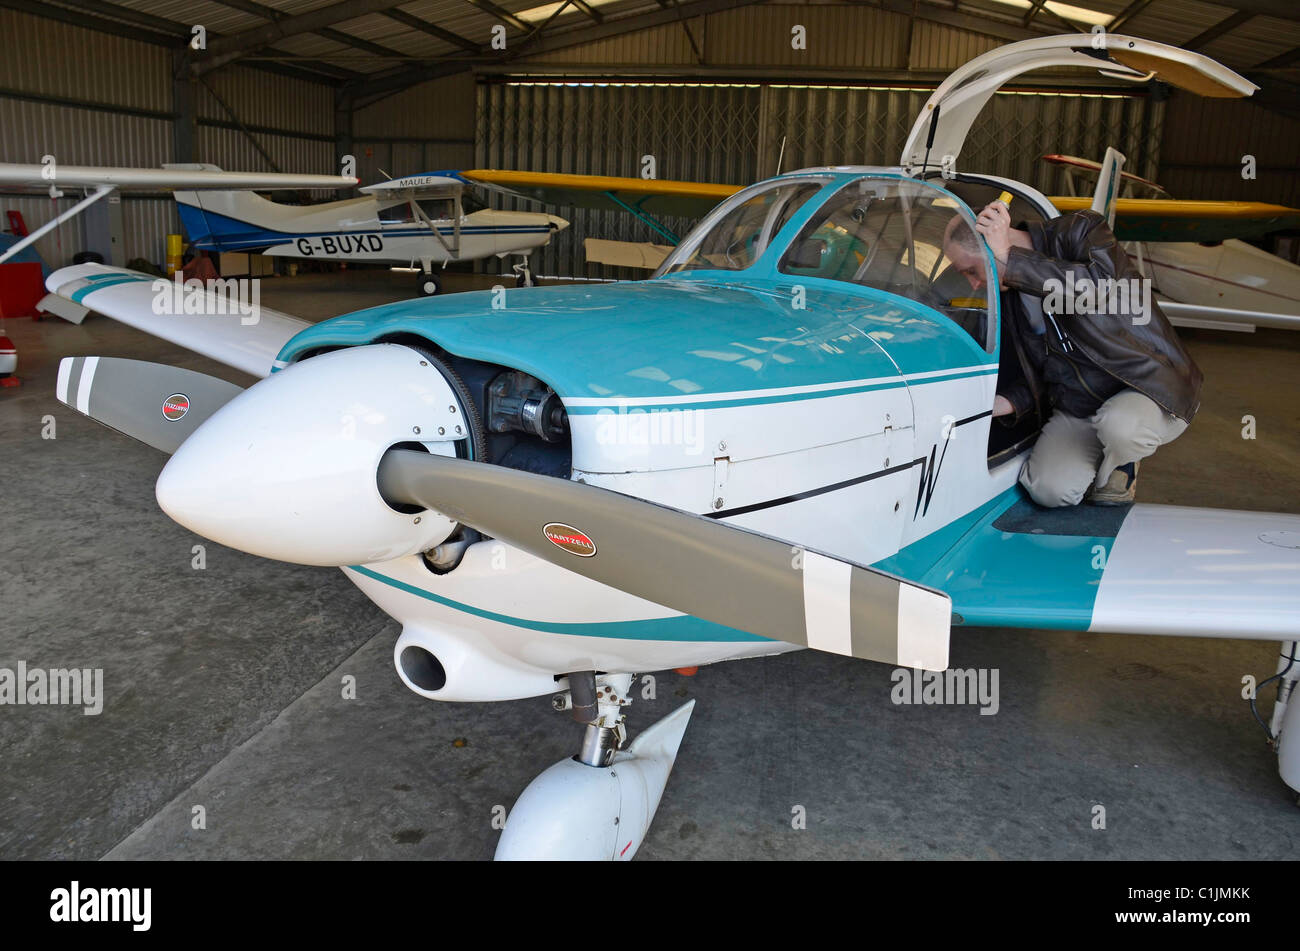 flight checks on light aircraft in hanger at popham airfield Stock Photo